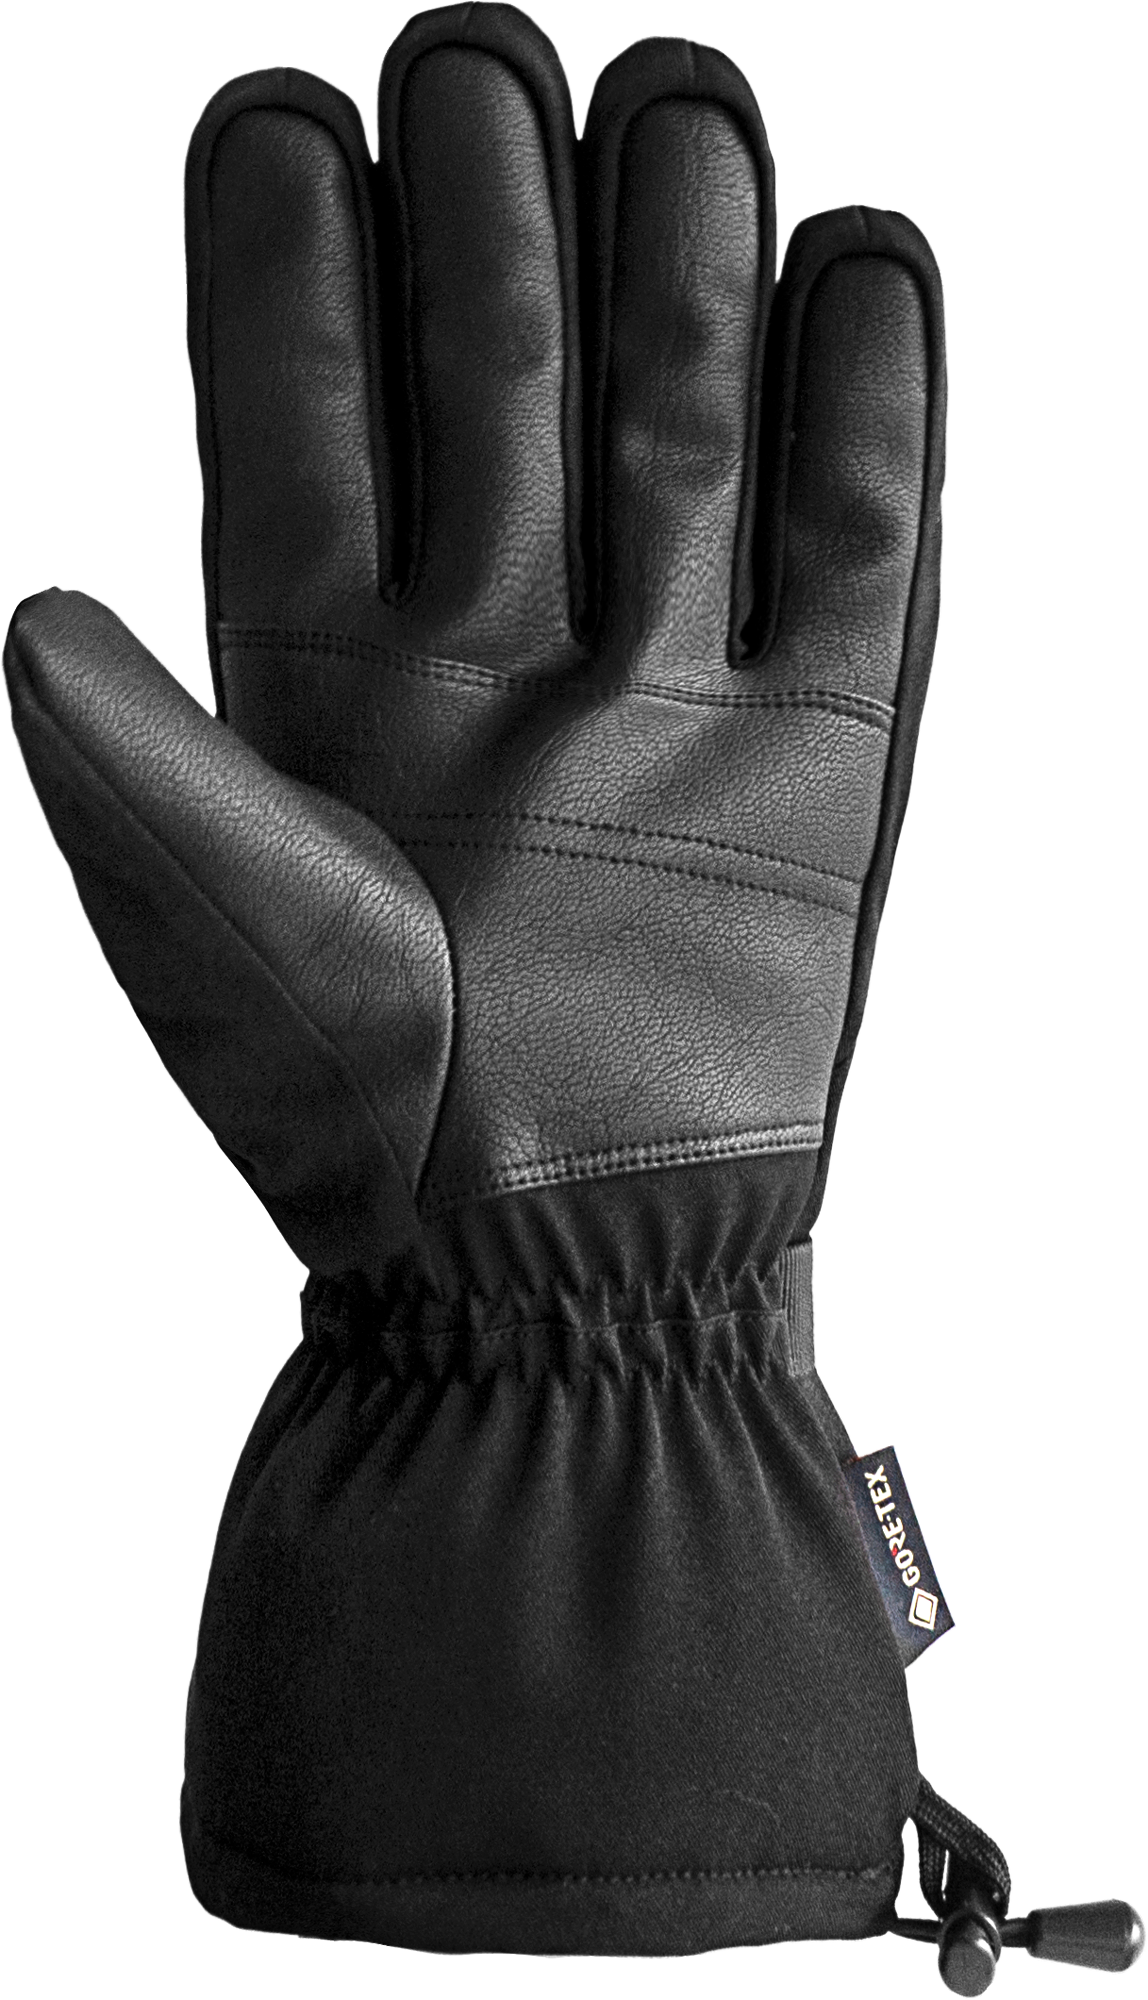 Winter Reusch Warm GORE-TEX Glove